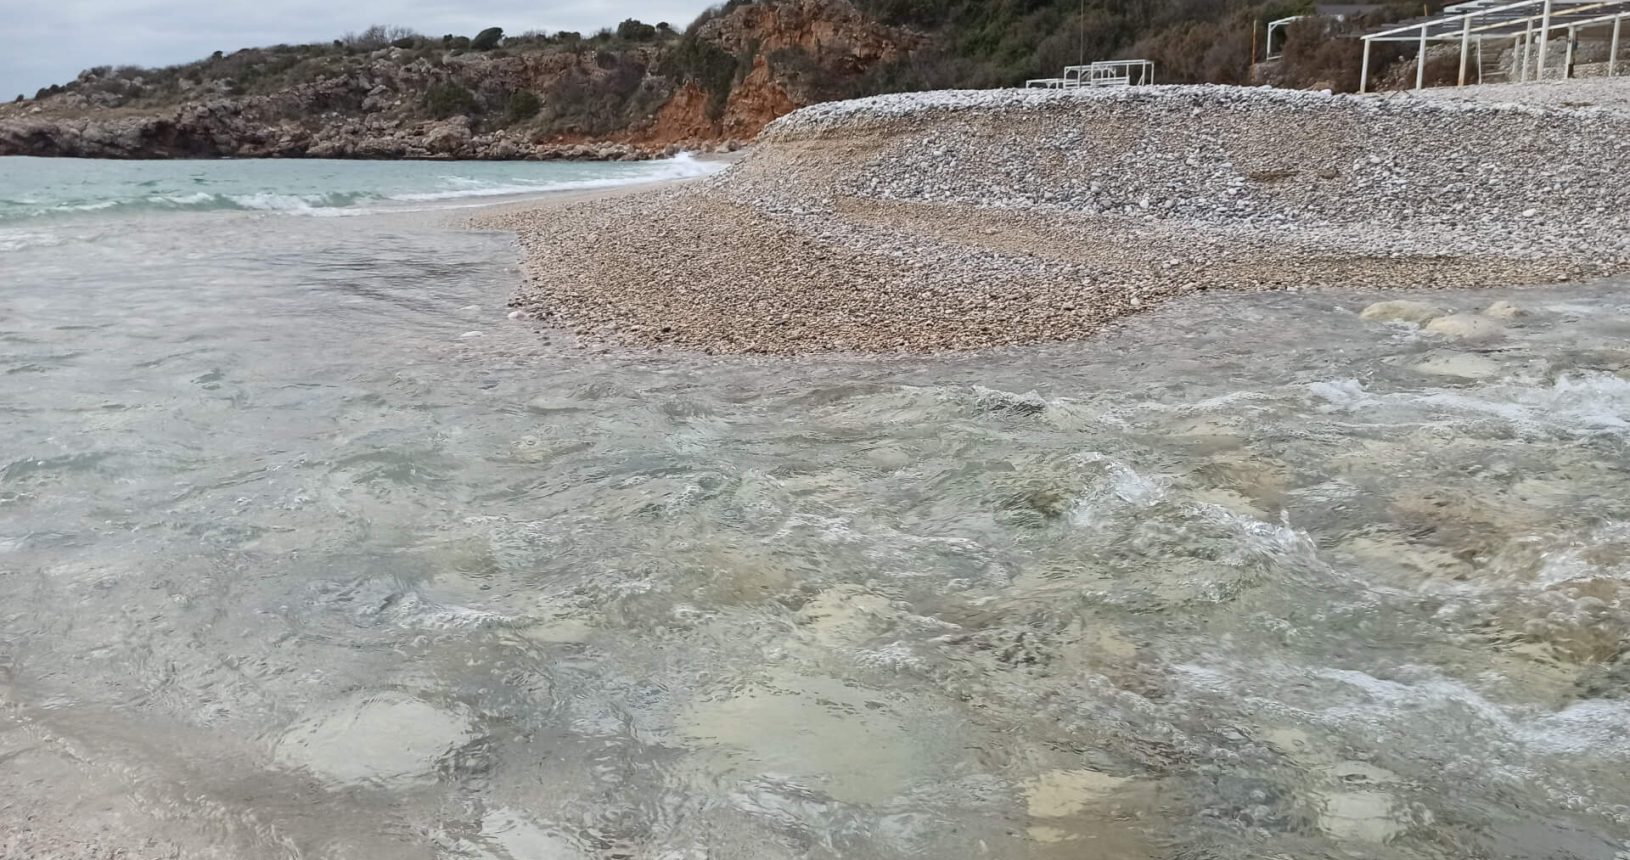 Drobni Pijesak beach. Transparent water in the flow